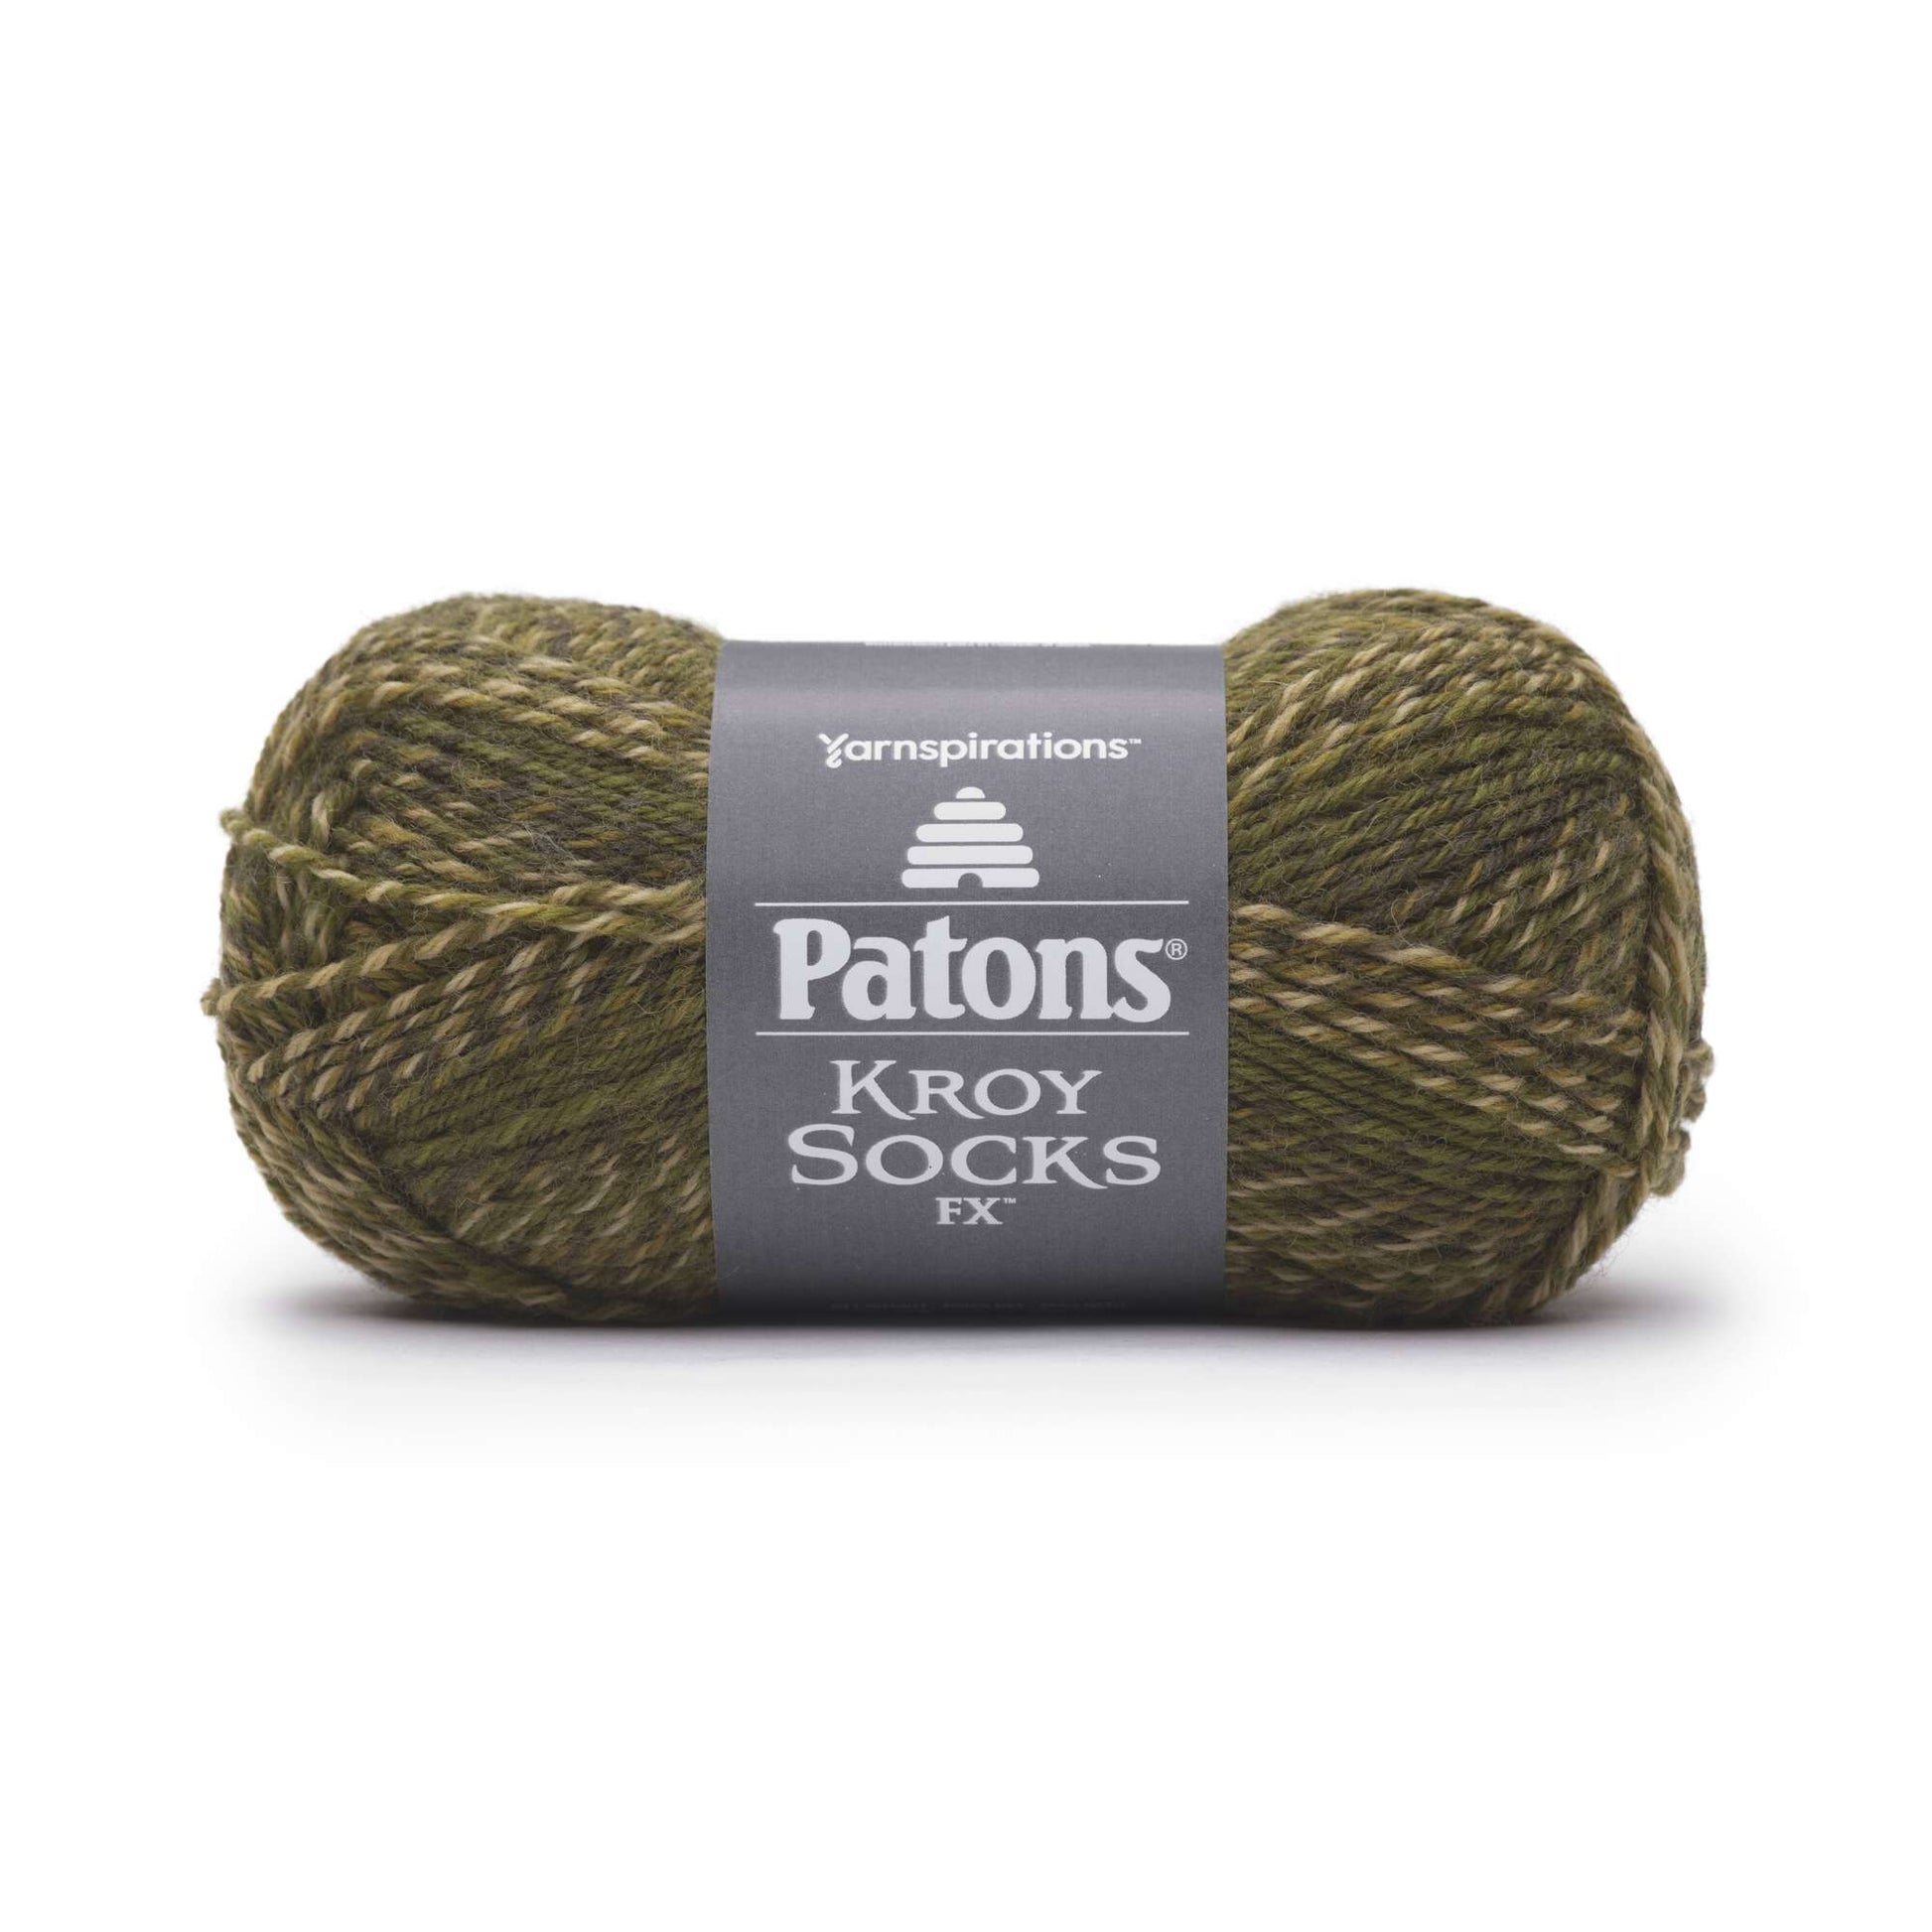 Patons Kroy Socks FX Yarn